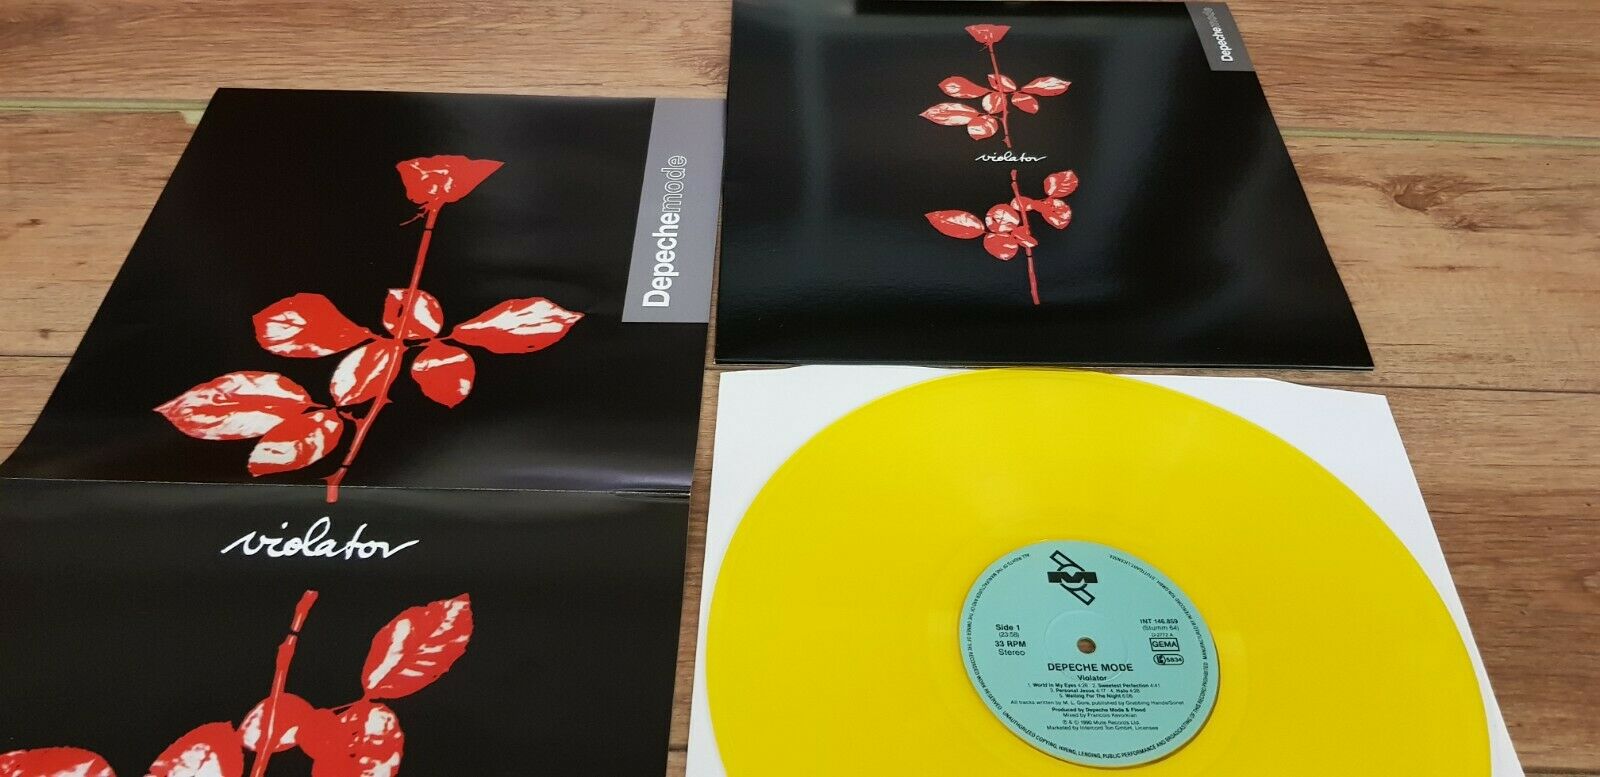 Depeche Mode - Violator (CD, Album, RE) (NM or M-)